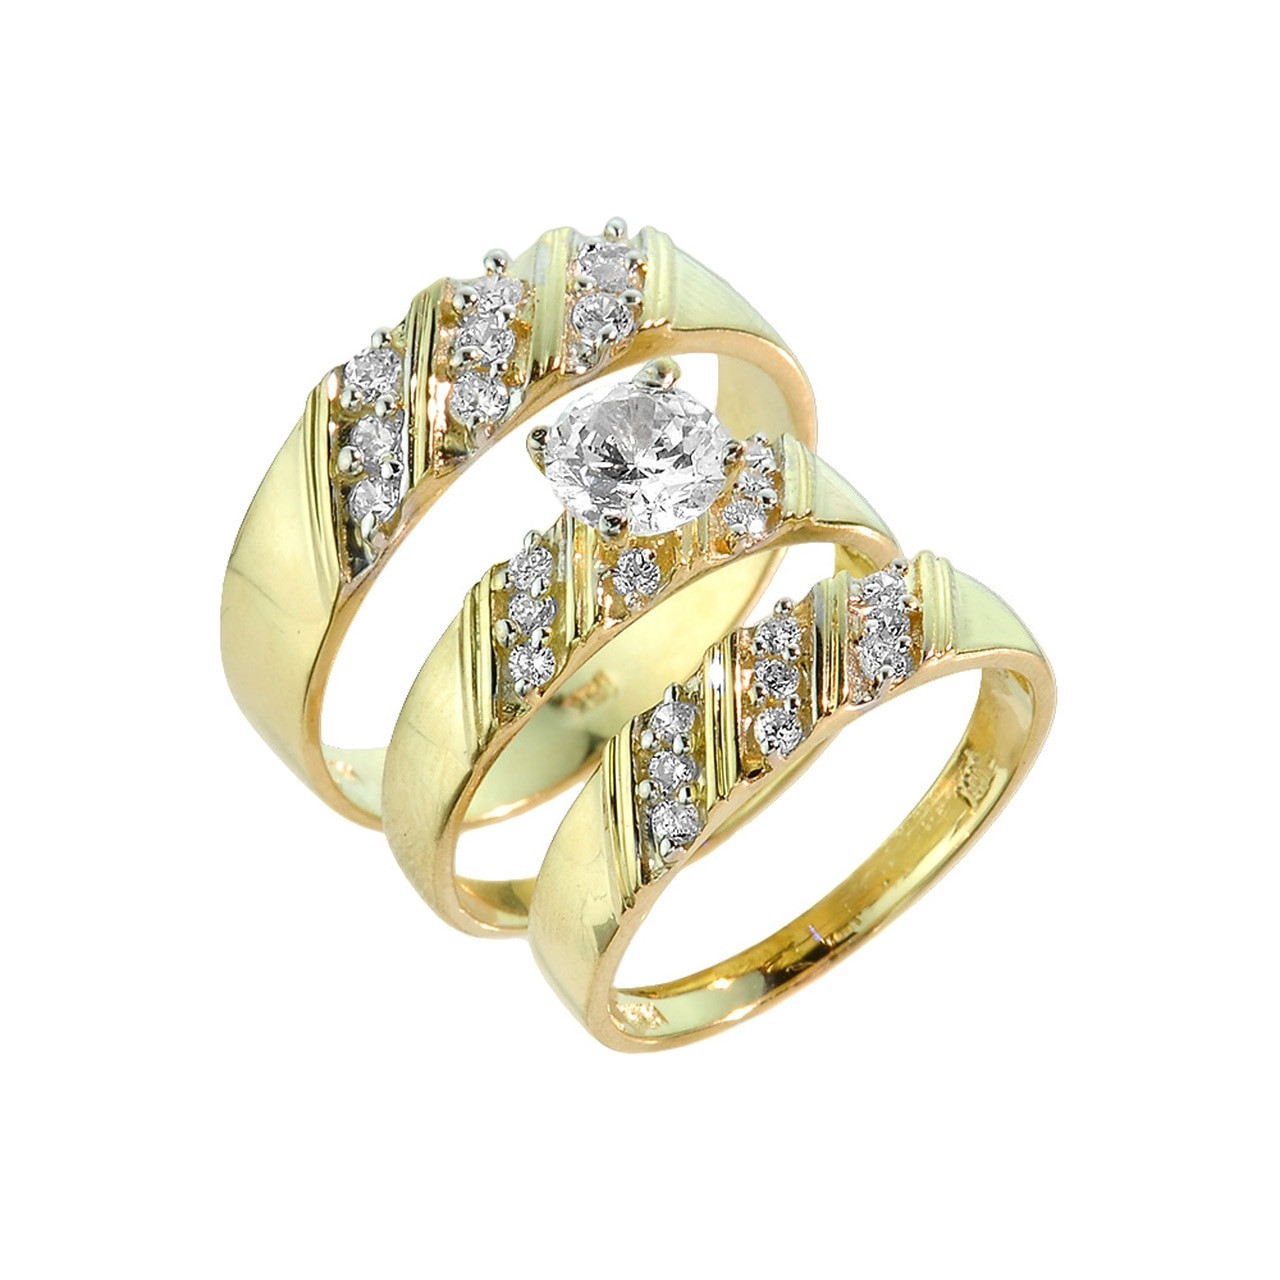 Cz Wedding Ring Sets
 Gold CZ 3 Piece Wedding Ring Set